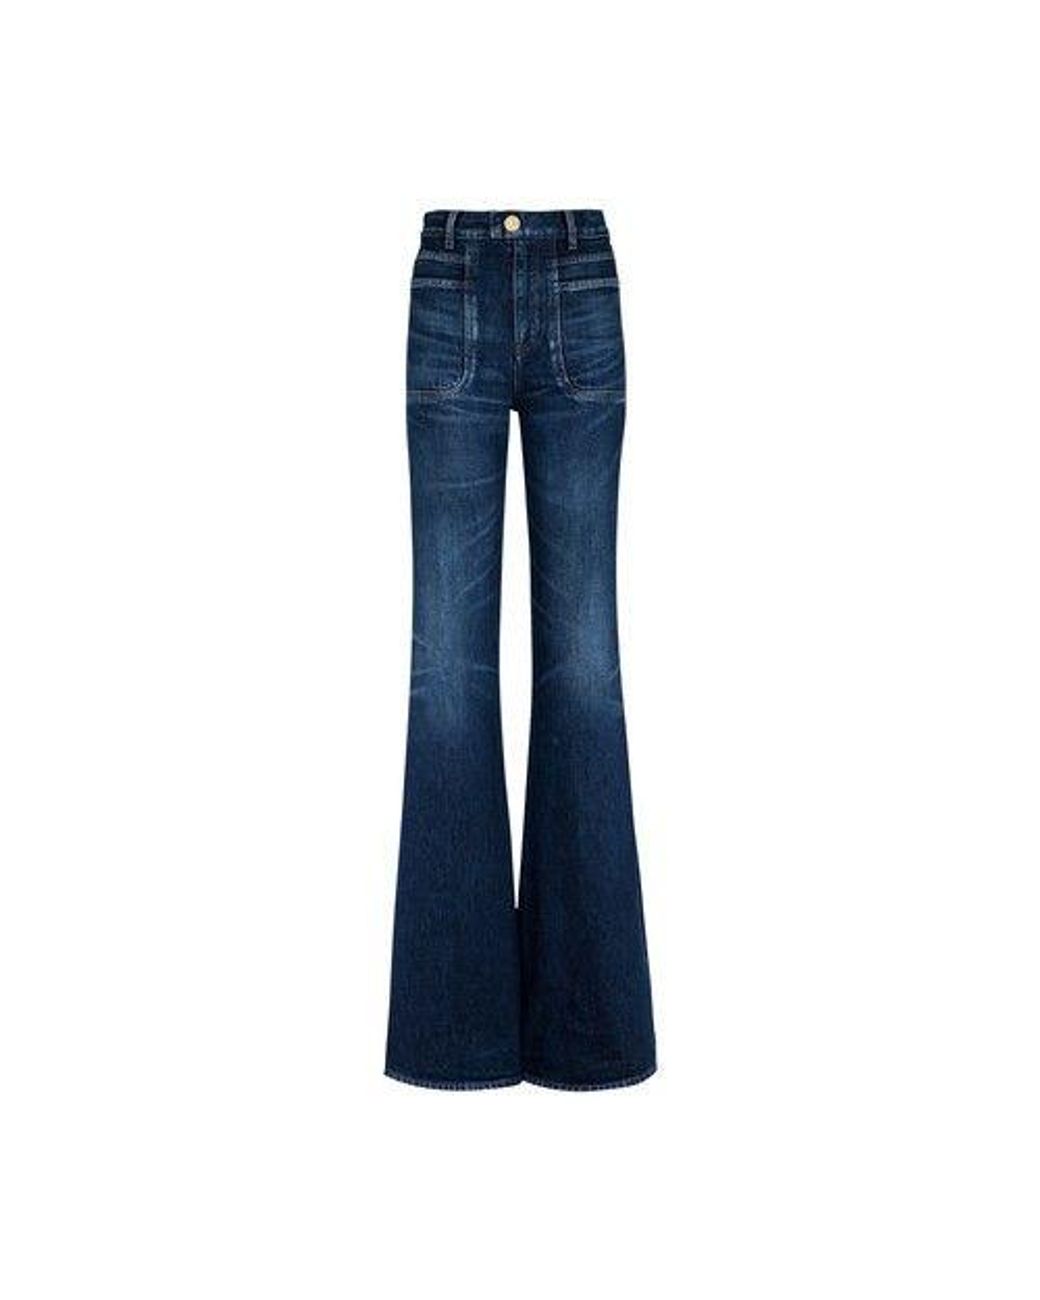 Balmain Denim Flare Jeans in Blue | Lyst